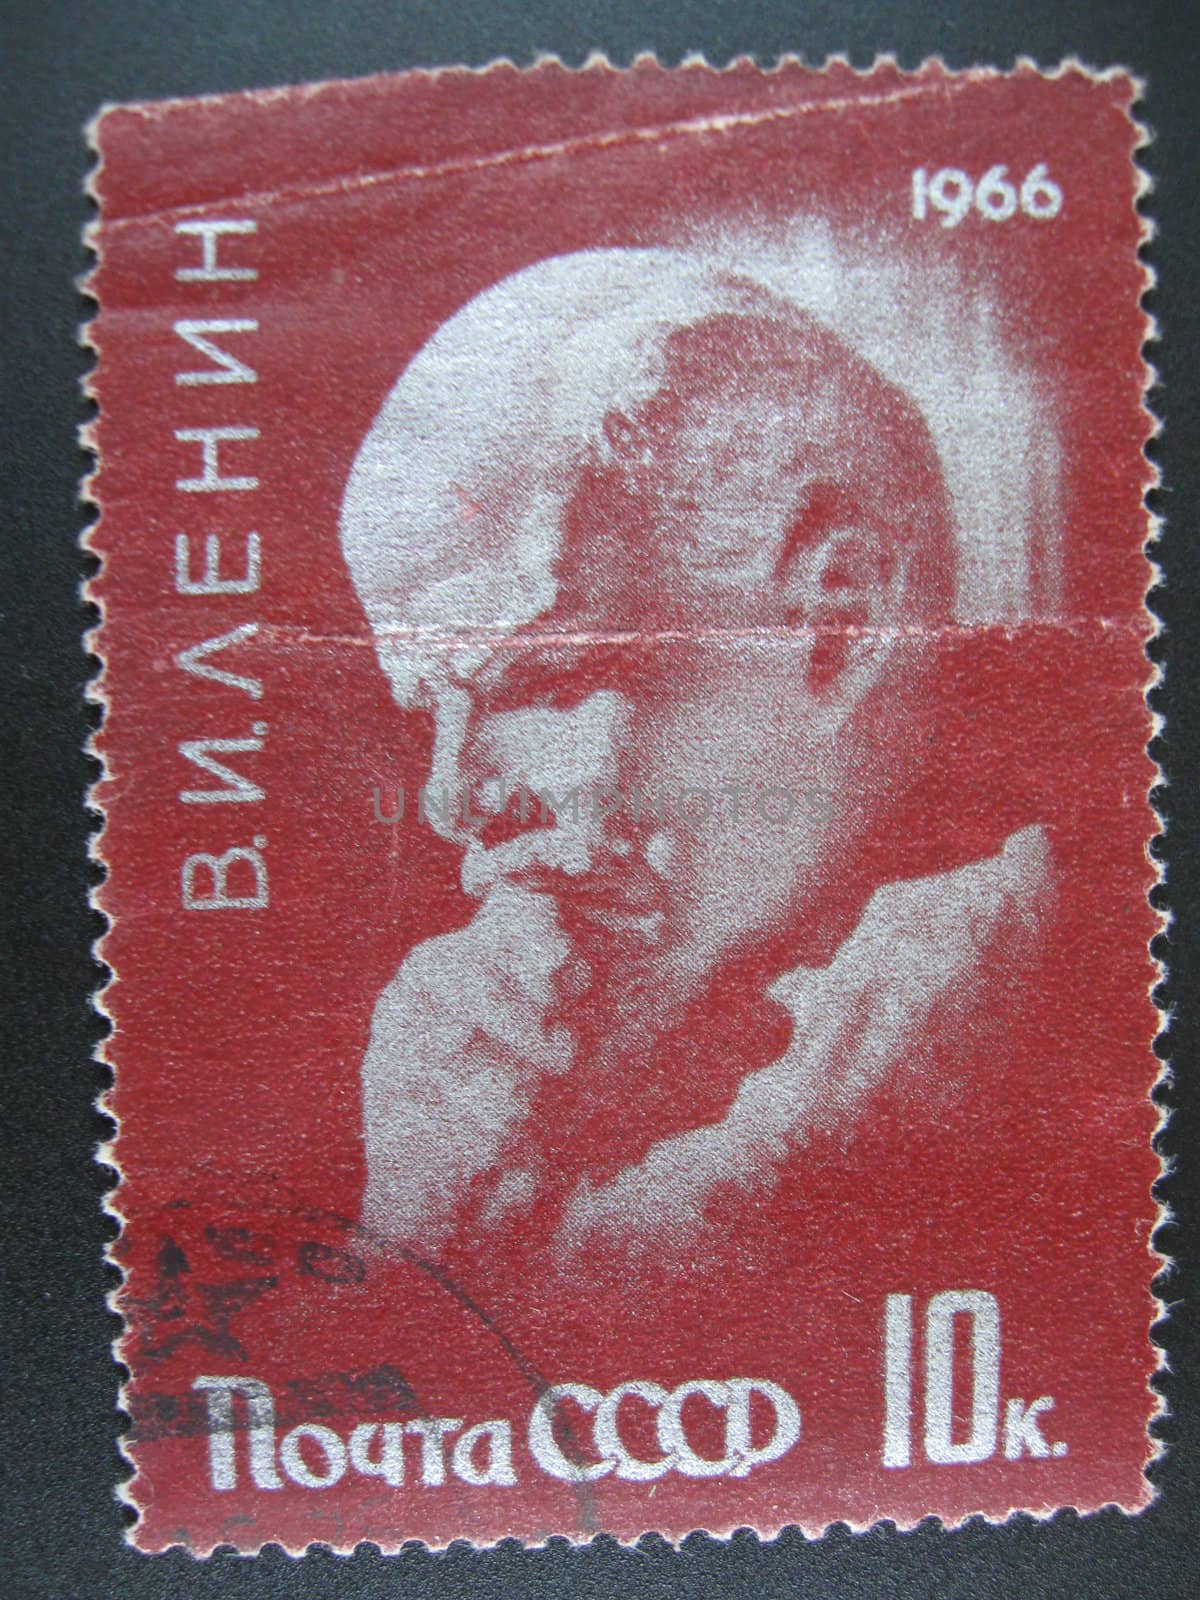 Stamp by dmitrubars